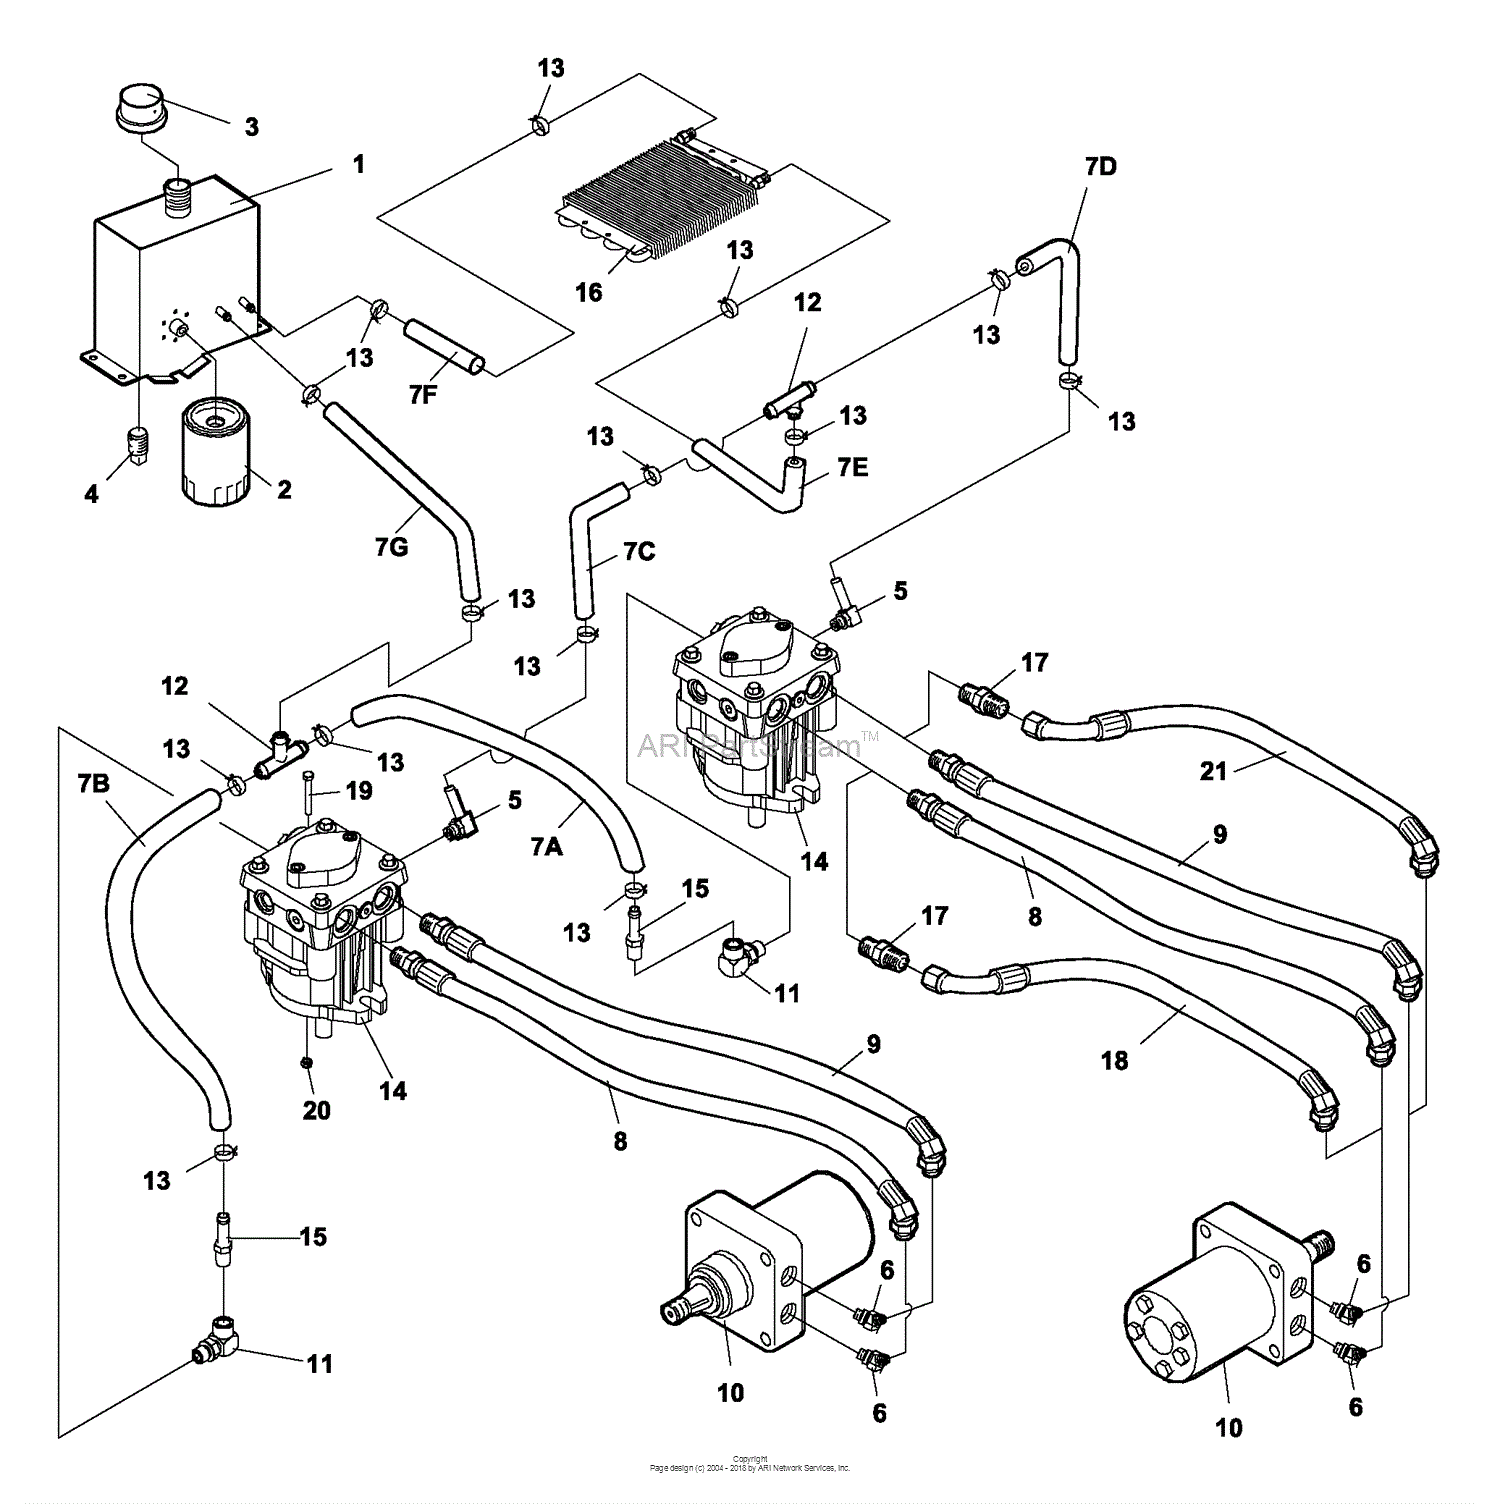 Bobcat 763 Fuel Wiring Diagram